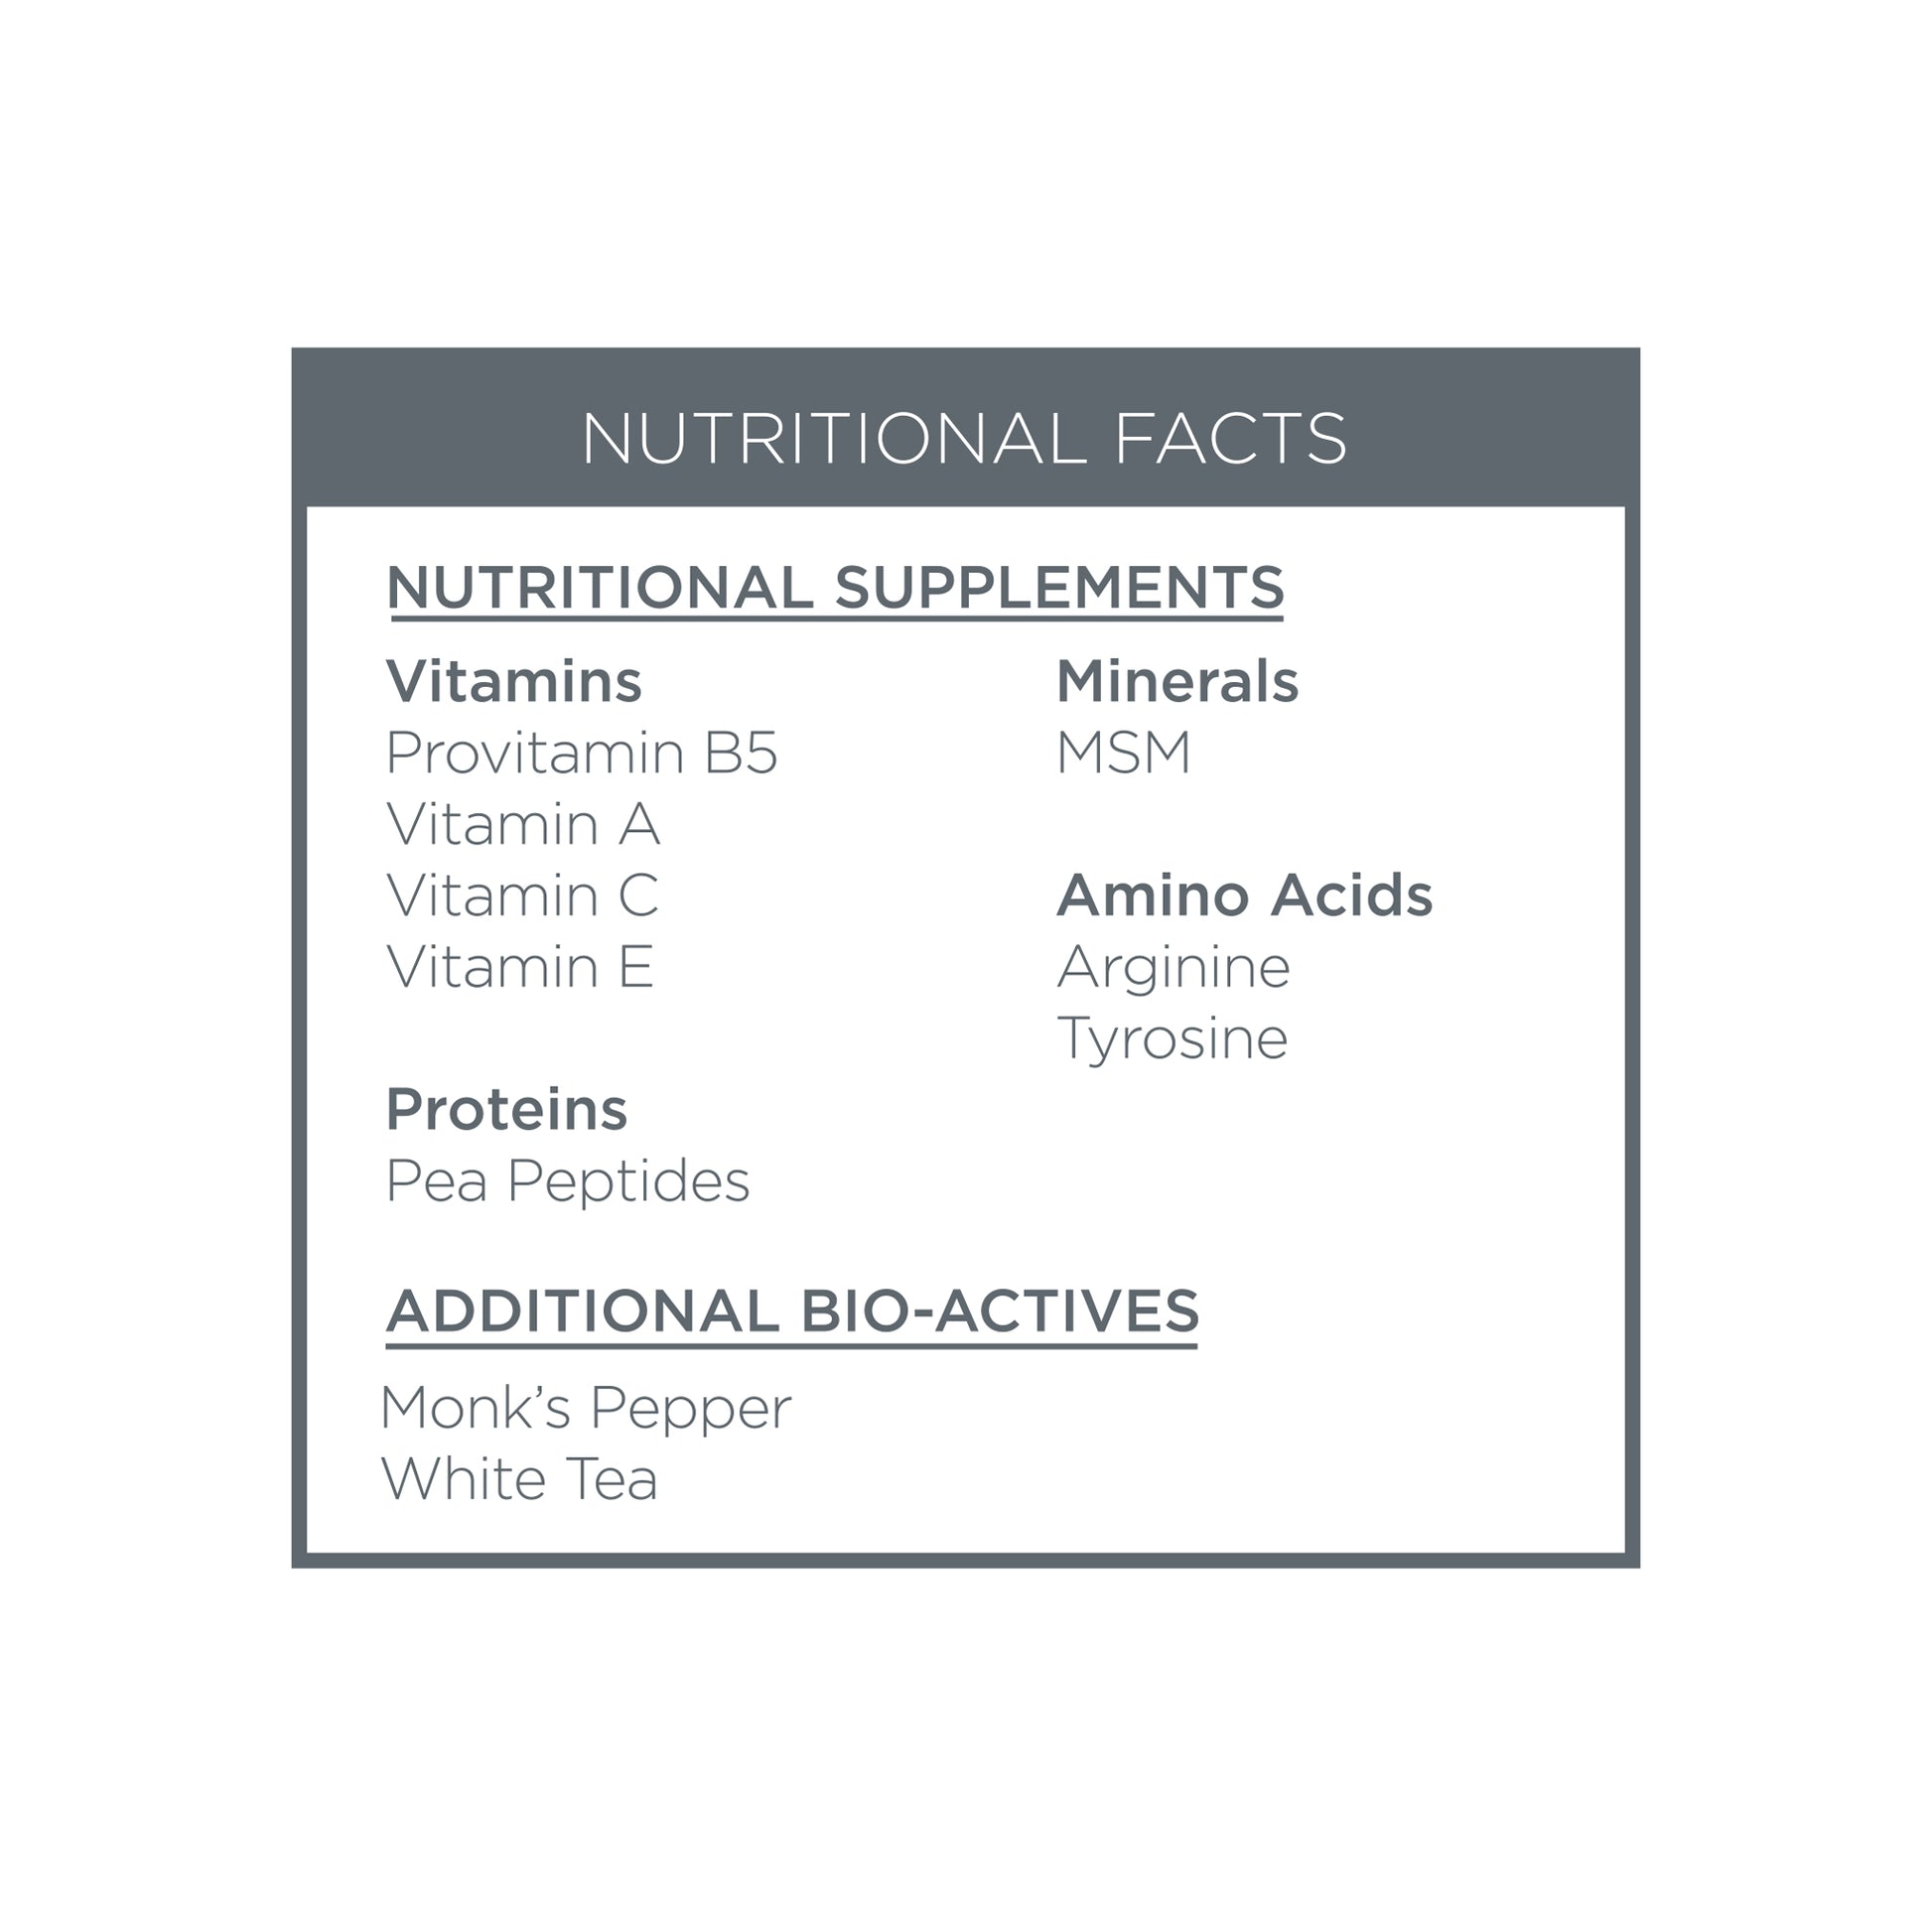 Vitamins B5, A, C & E. Protein Pea Peptides. Amino Acids Arginine & Tyrosine. Minerals MSM. Additional Bio-Actives Monk's Pepper & White Tea. 